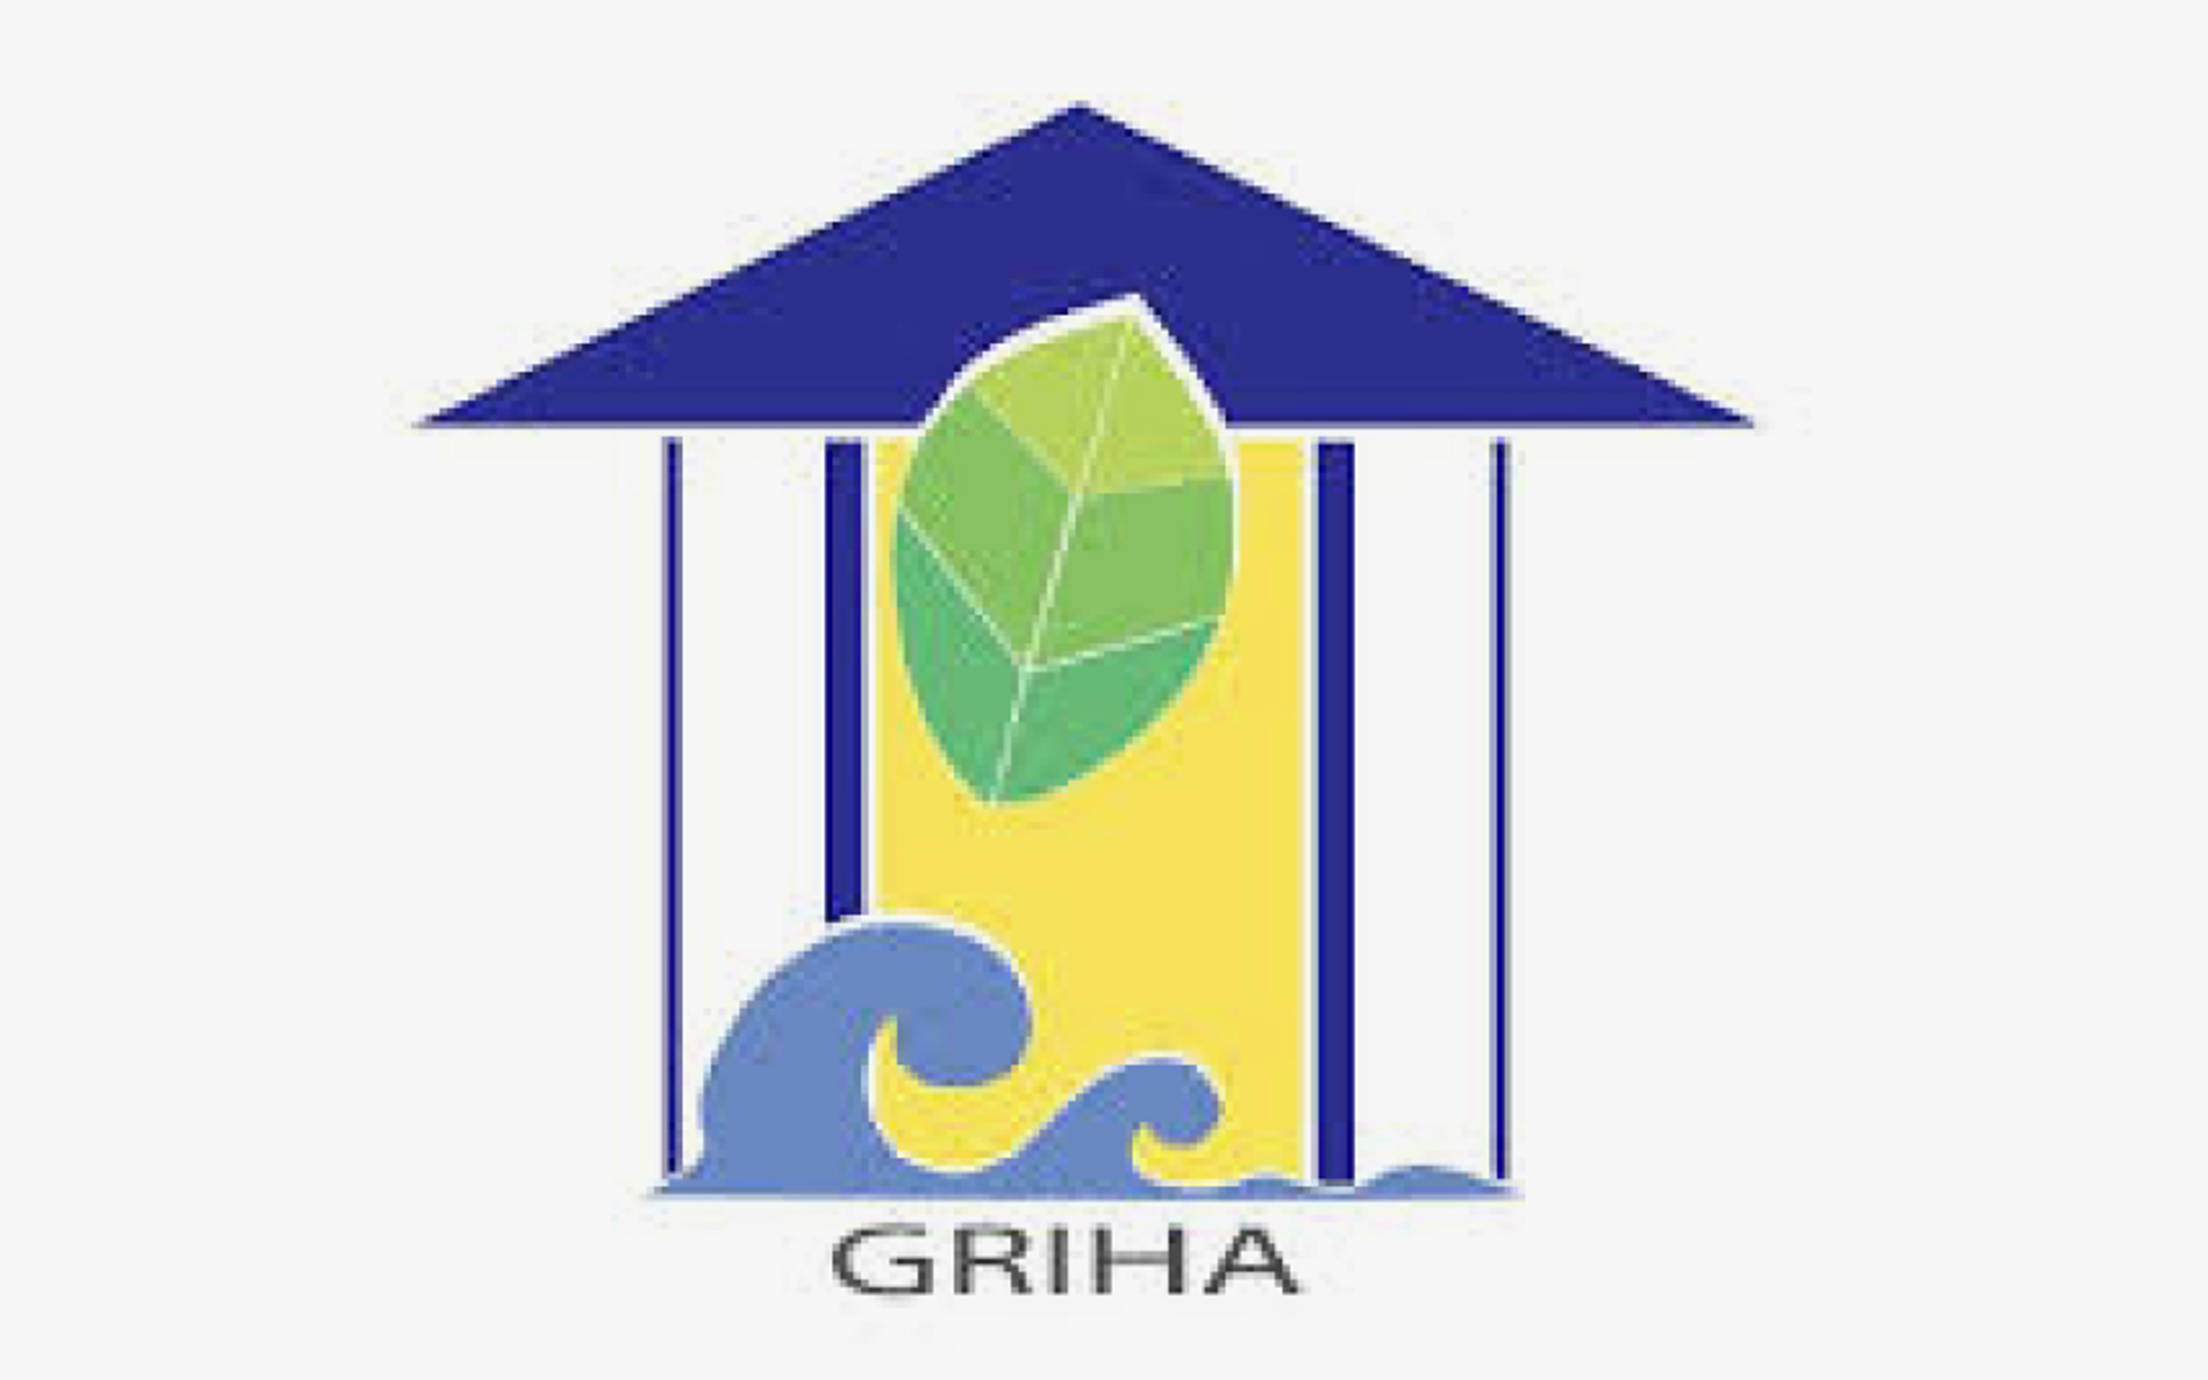 GRIHA logo on gray background